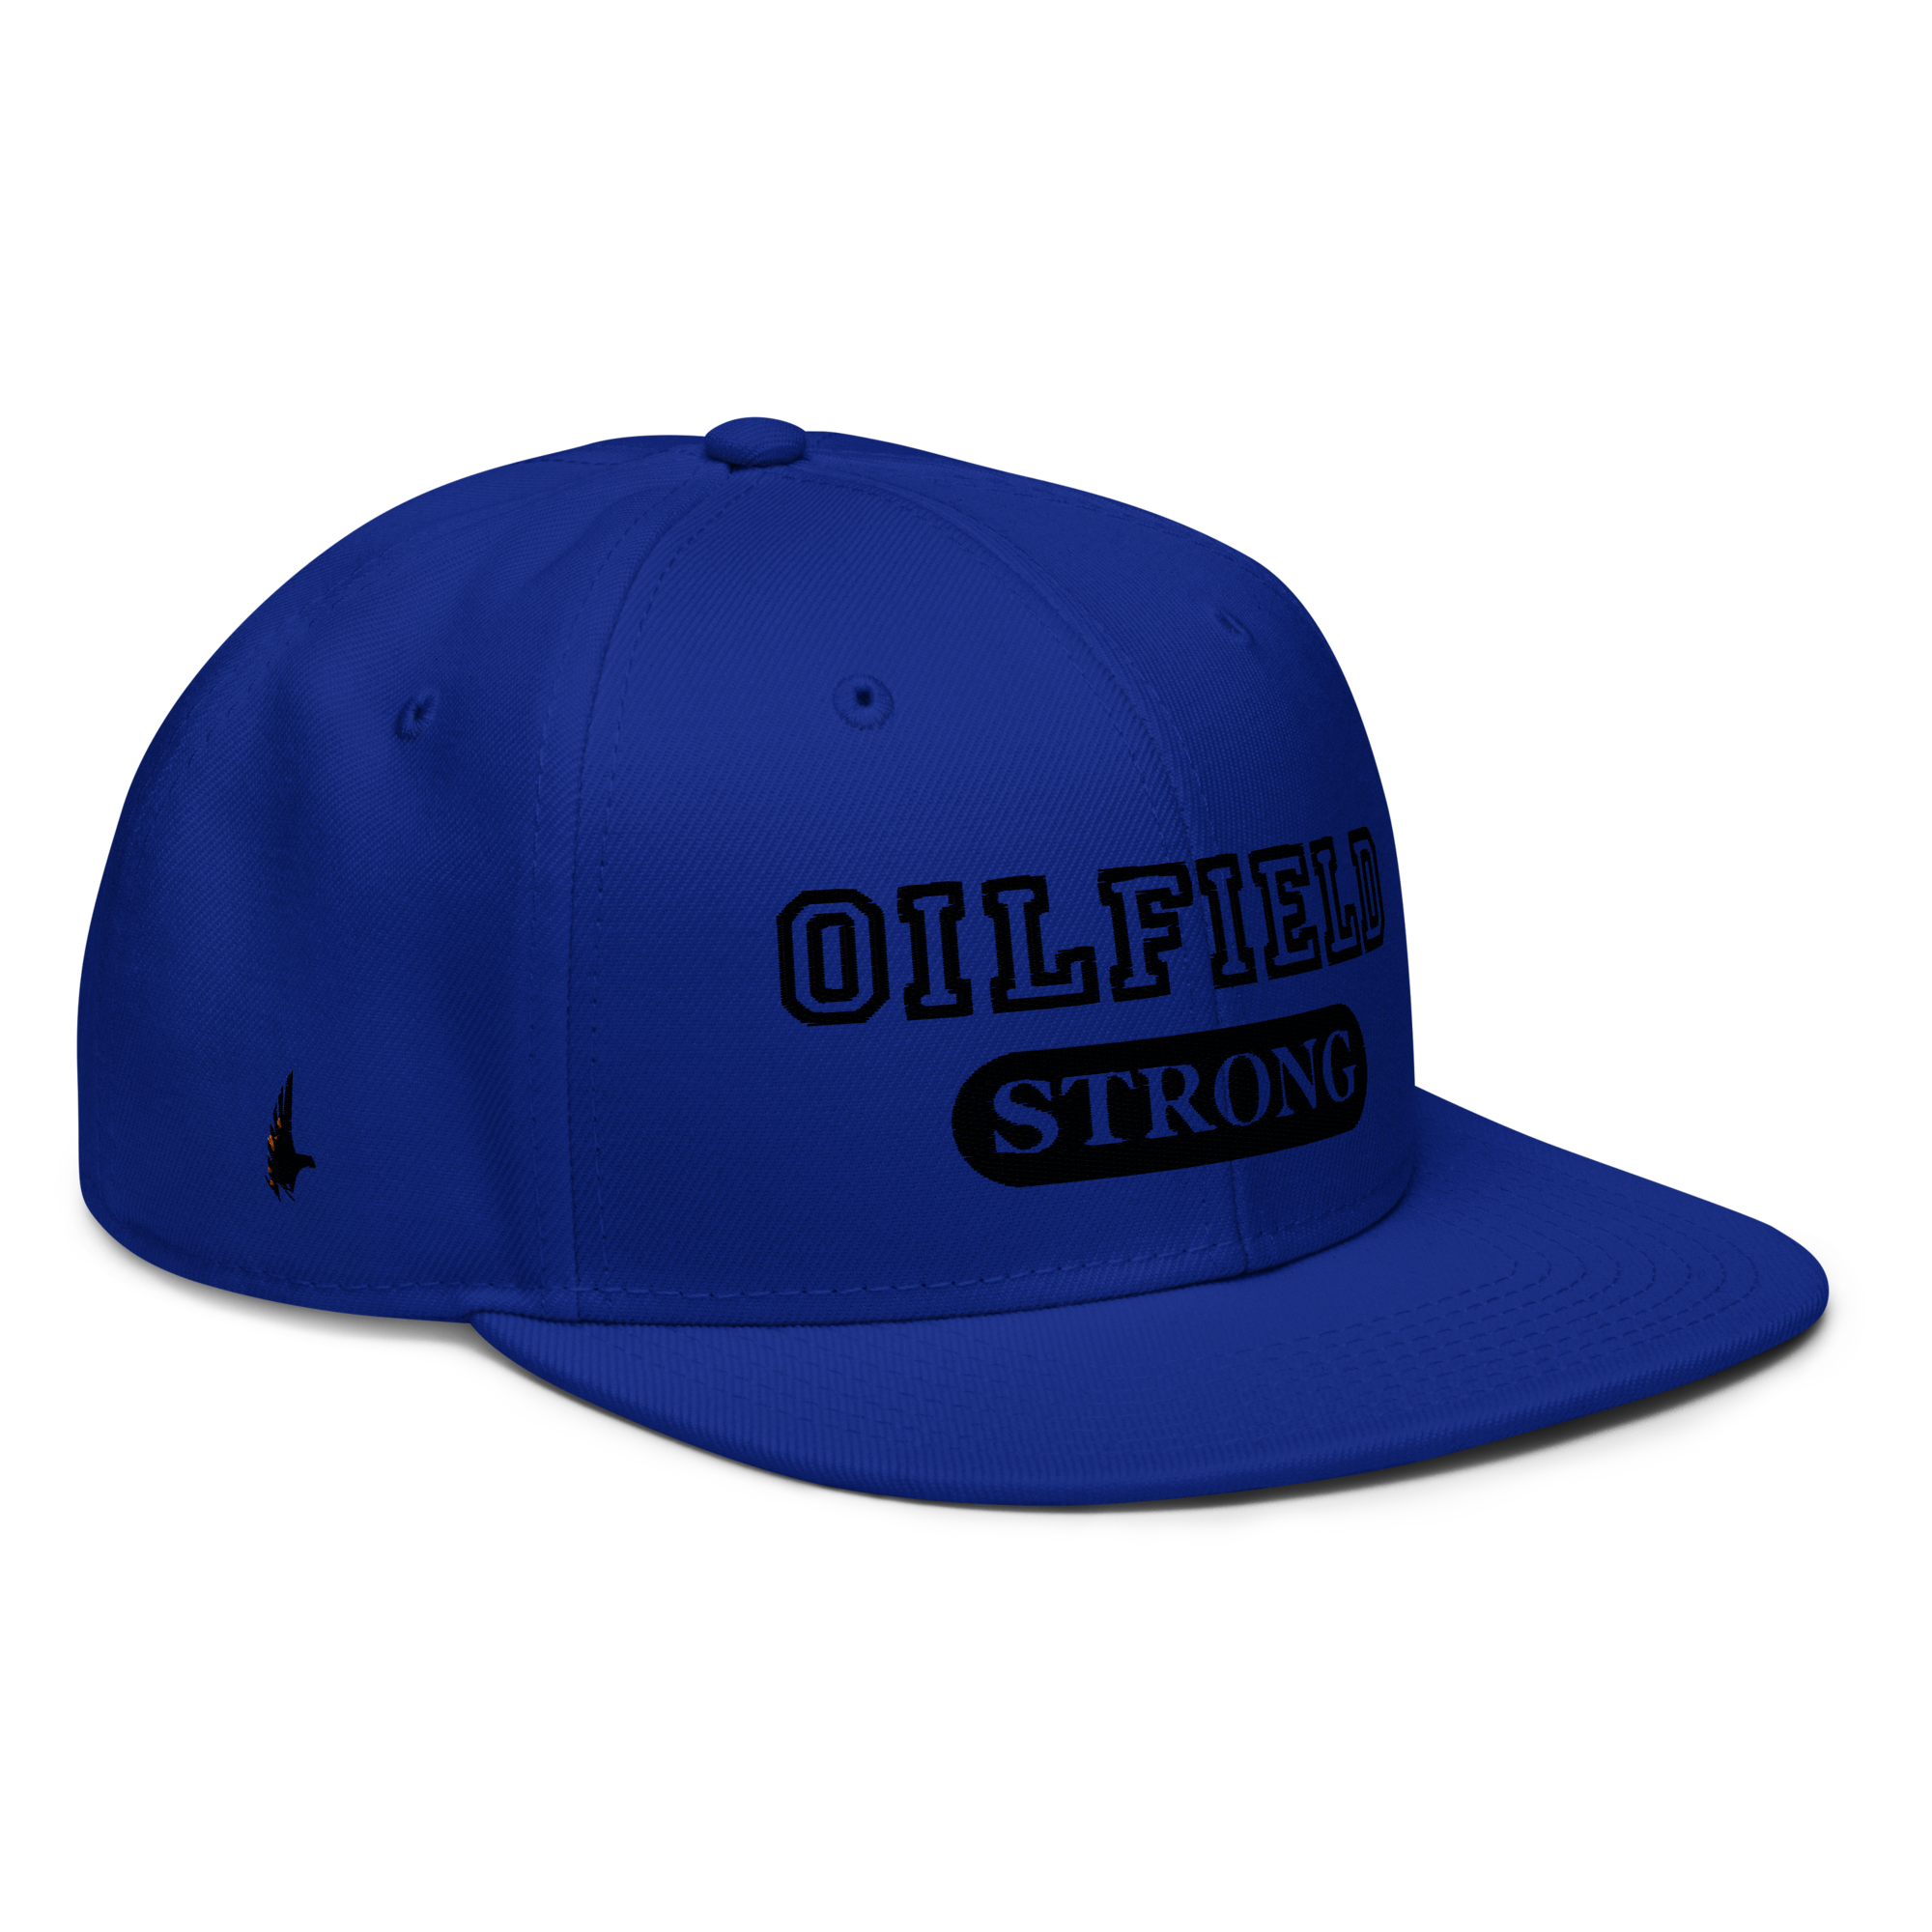 Oilfield Strong Snapback Hat - Blue / Black - Loyalty Vibes